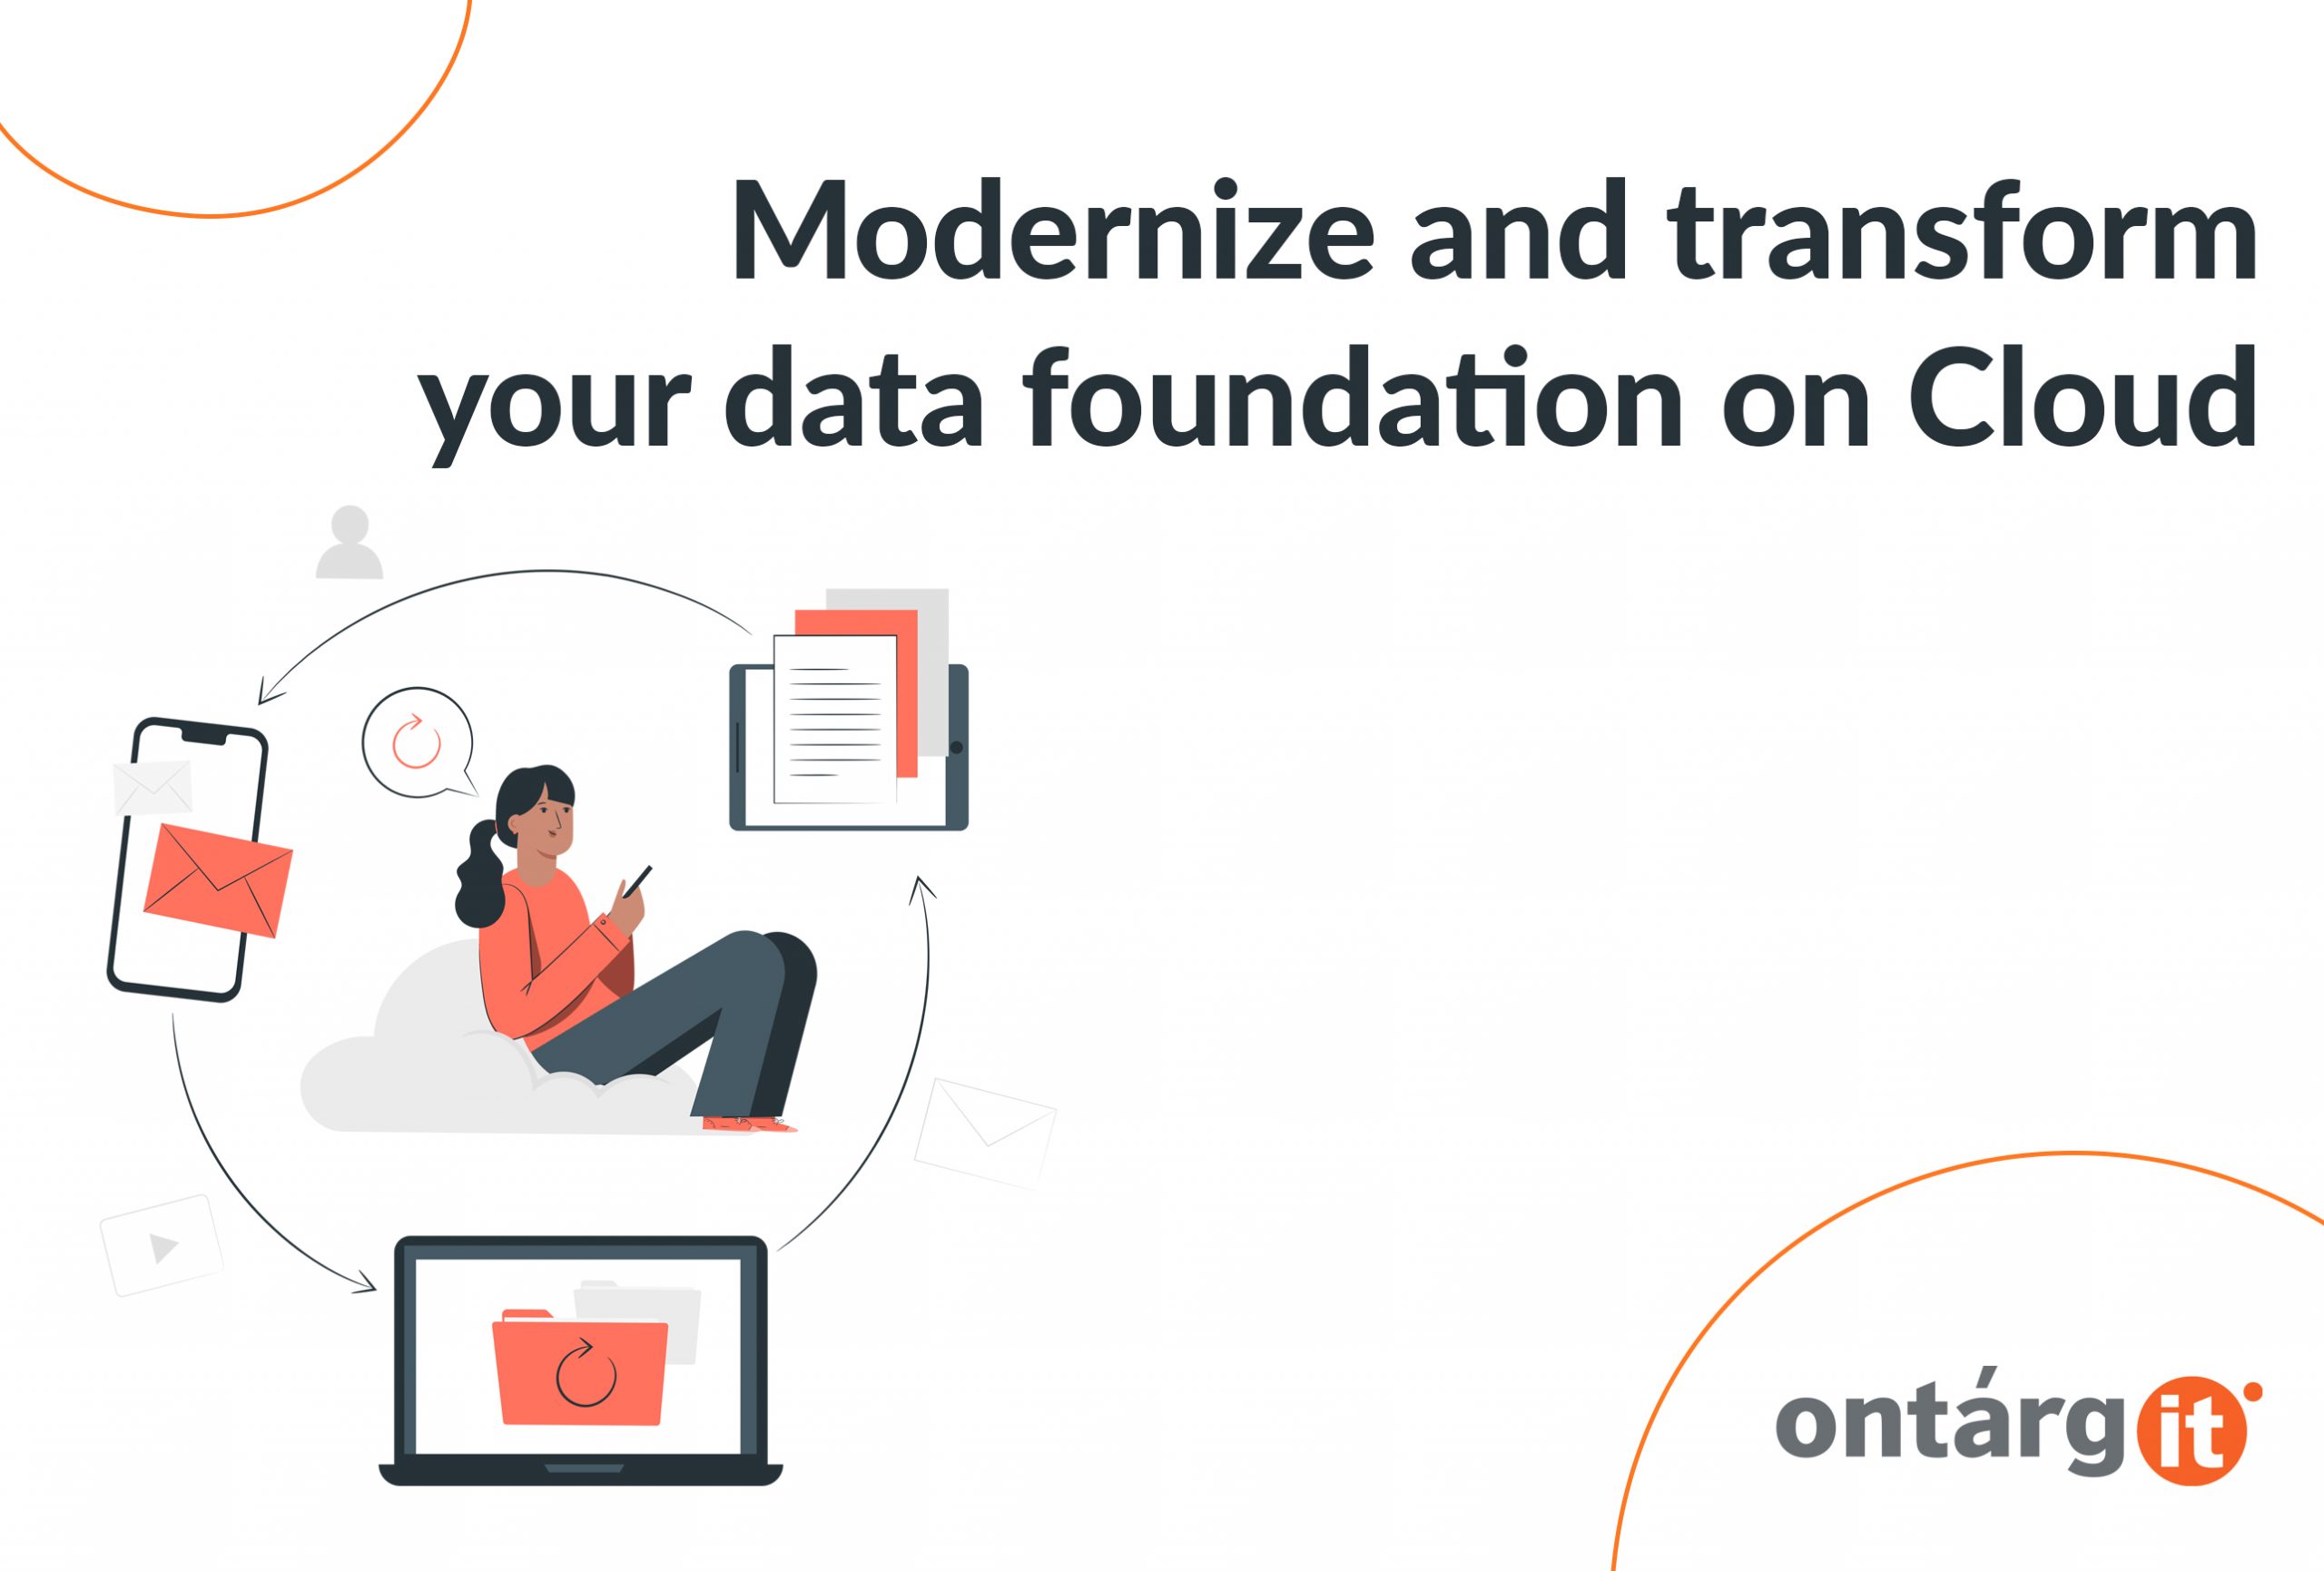 Data foundation modernization